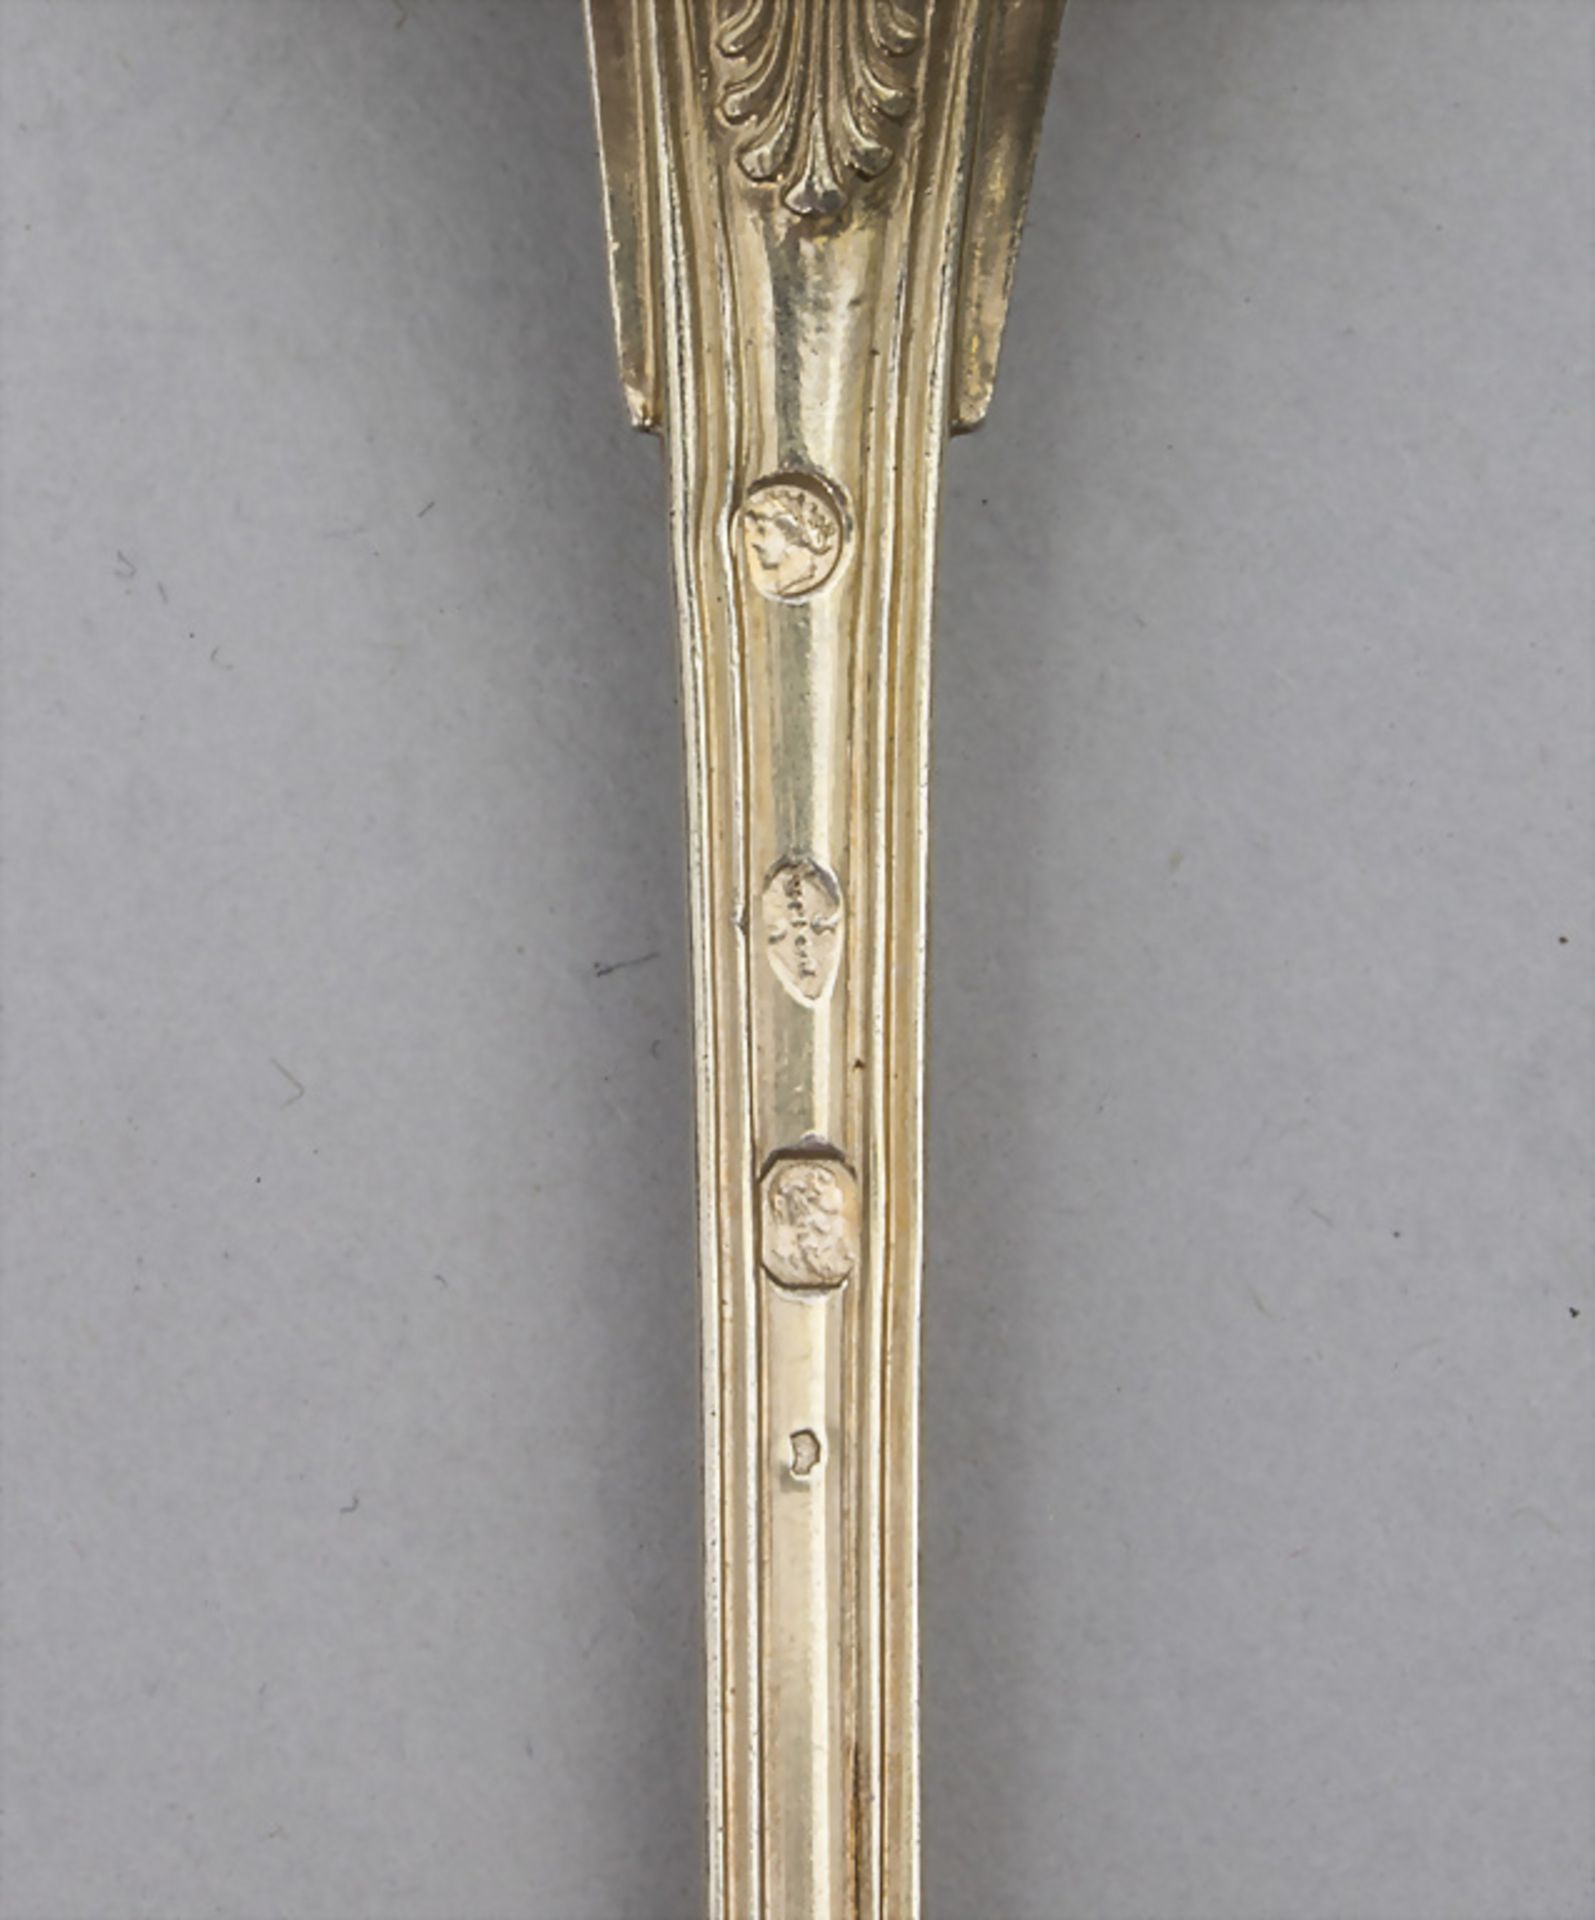 36 tlg. Silberbesteck / A 36-piece set of silver cutlery, Charles Salomon Mahler, Paris, 1824-1833 - Bild 6 aus 15